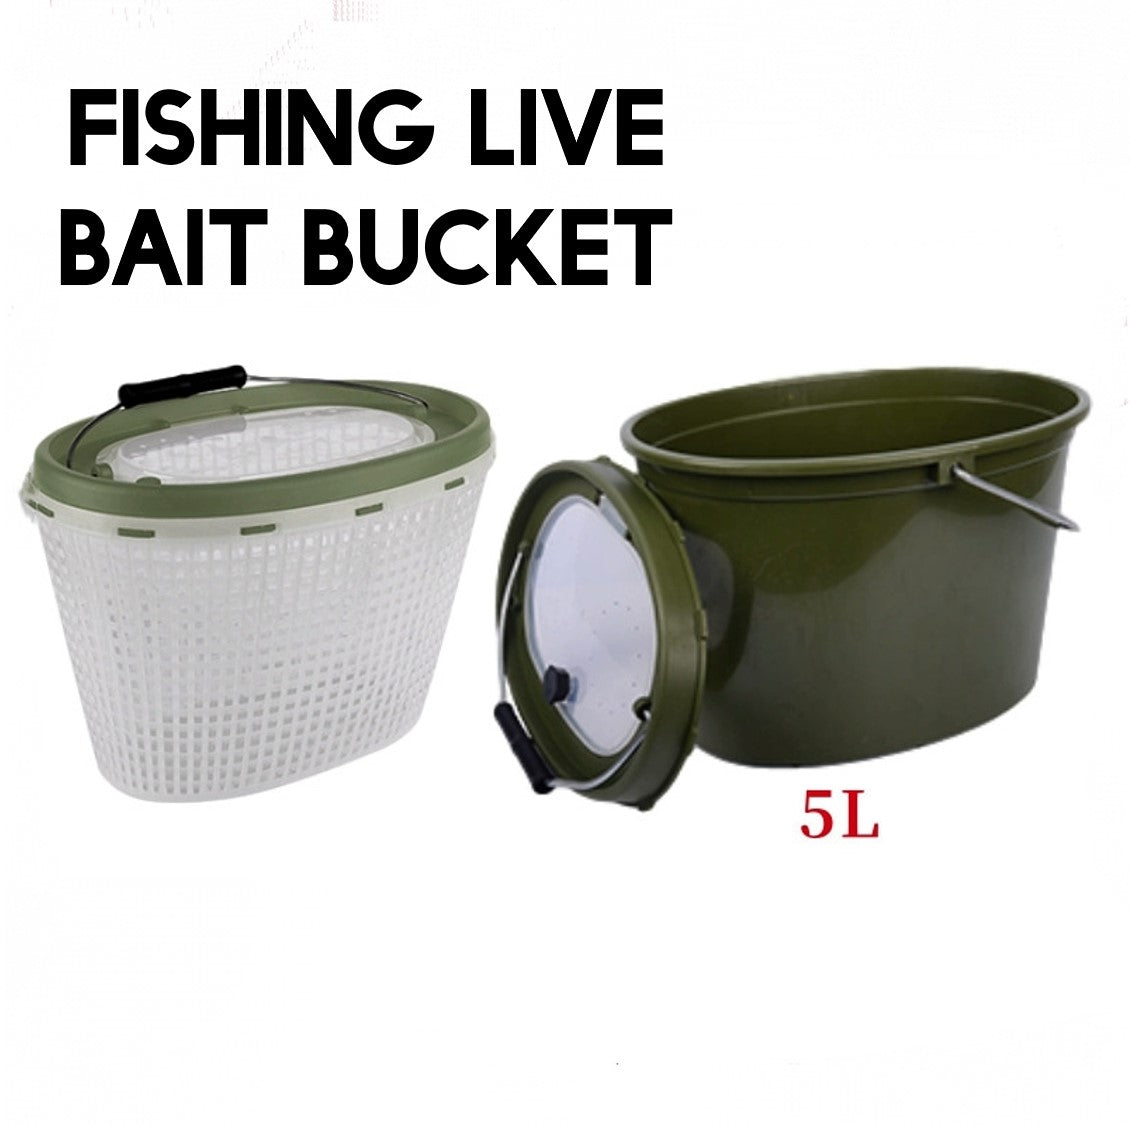 Fishing live bait bucket SLB04 – WBQ Tackle supplies